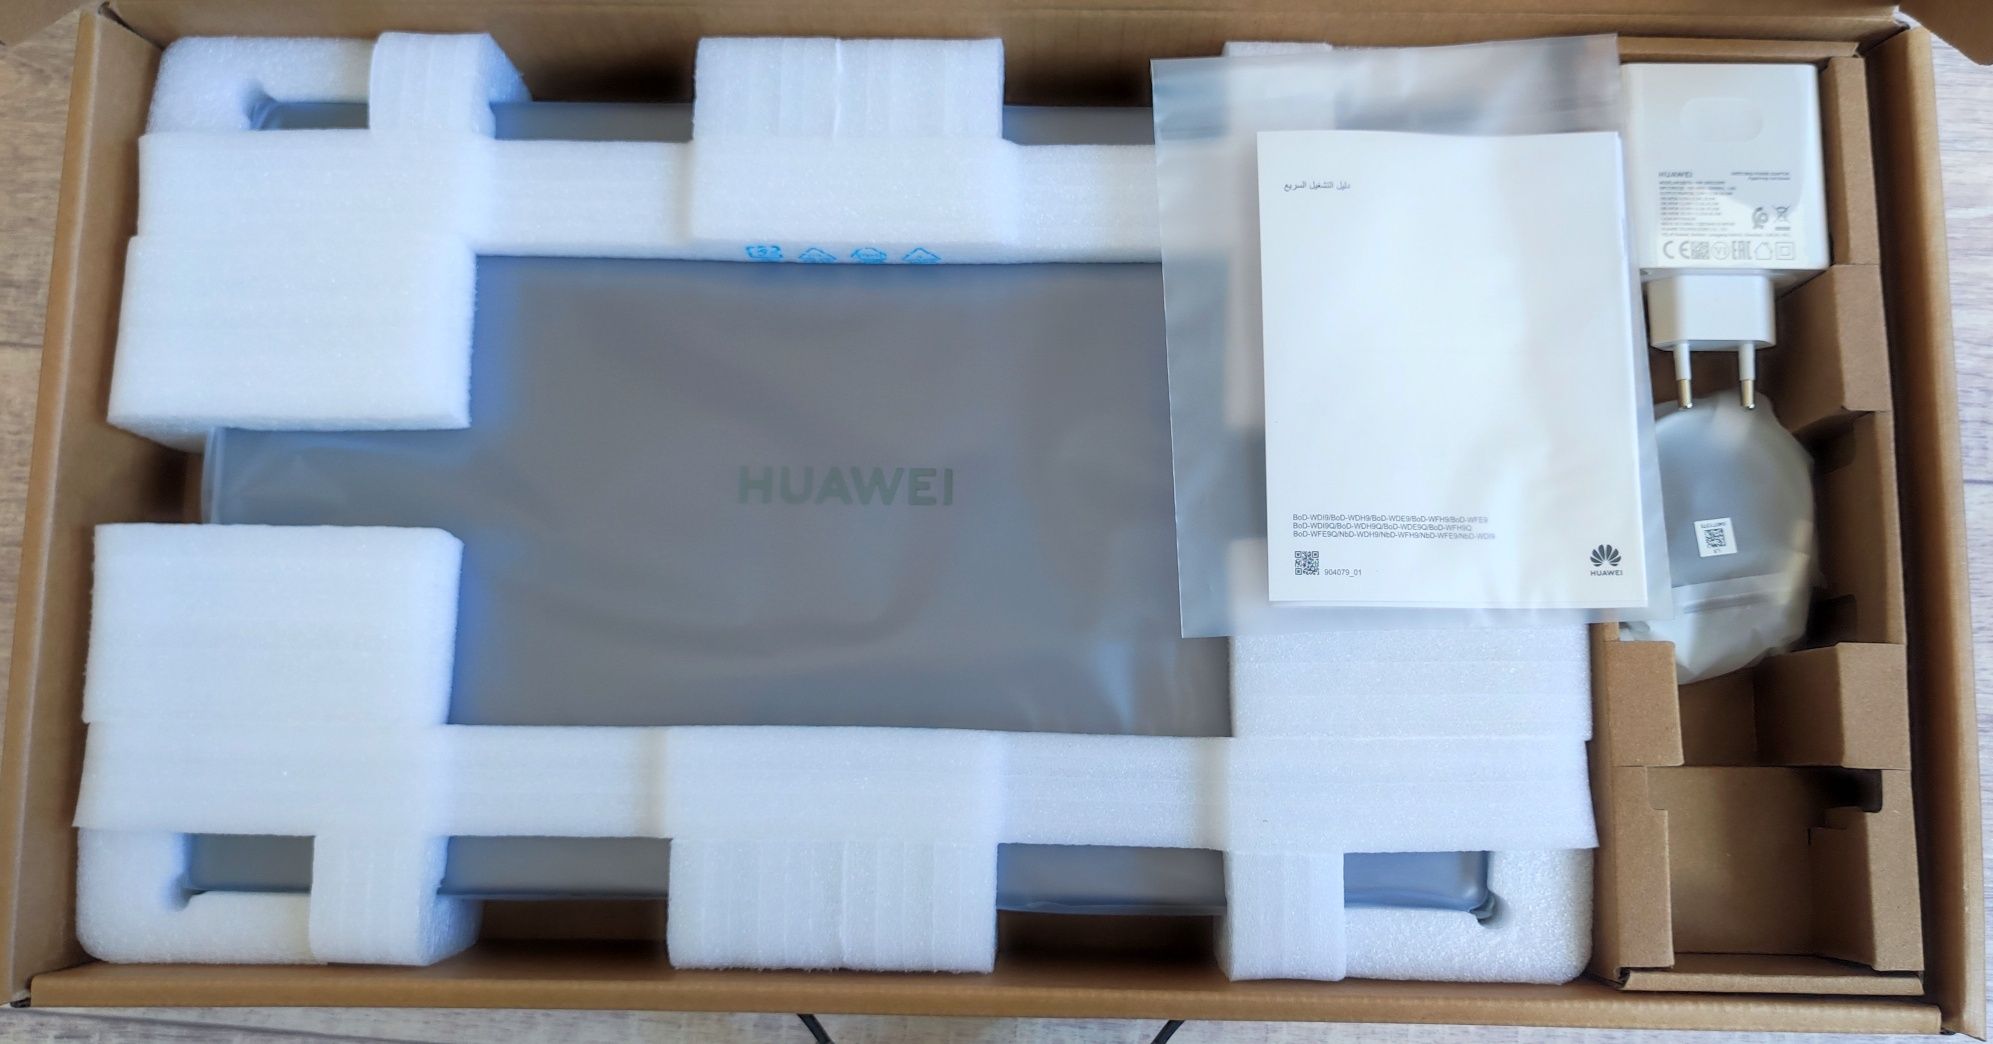 Ноутбук 15,6" Huawei MateBook D 15 BOD-WDI9 53013SDV